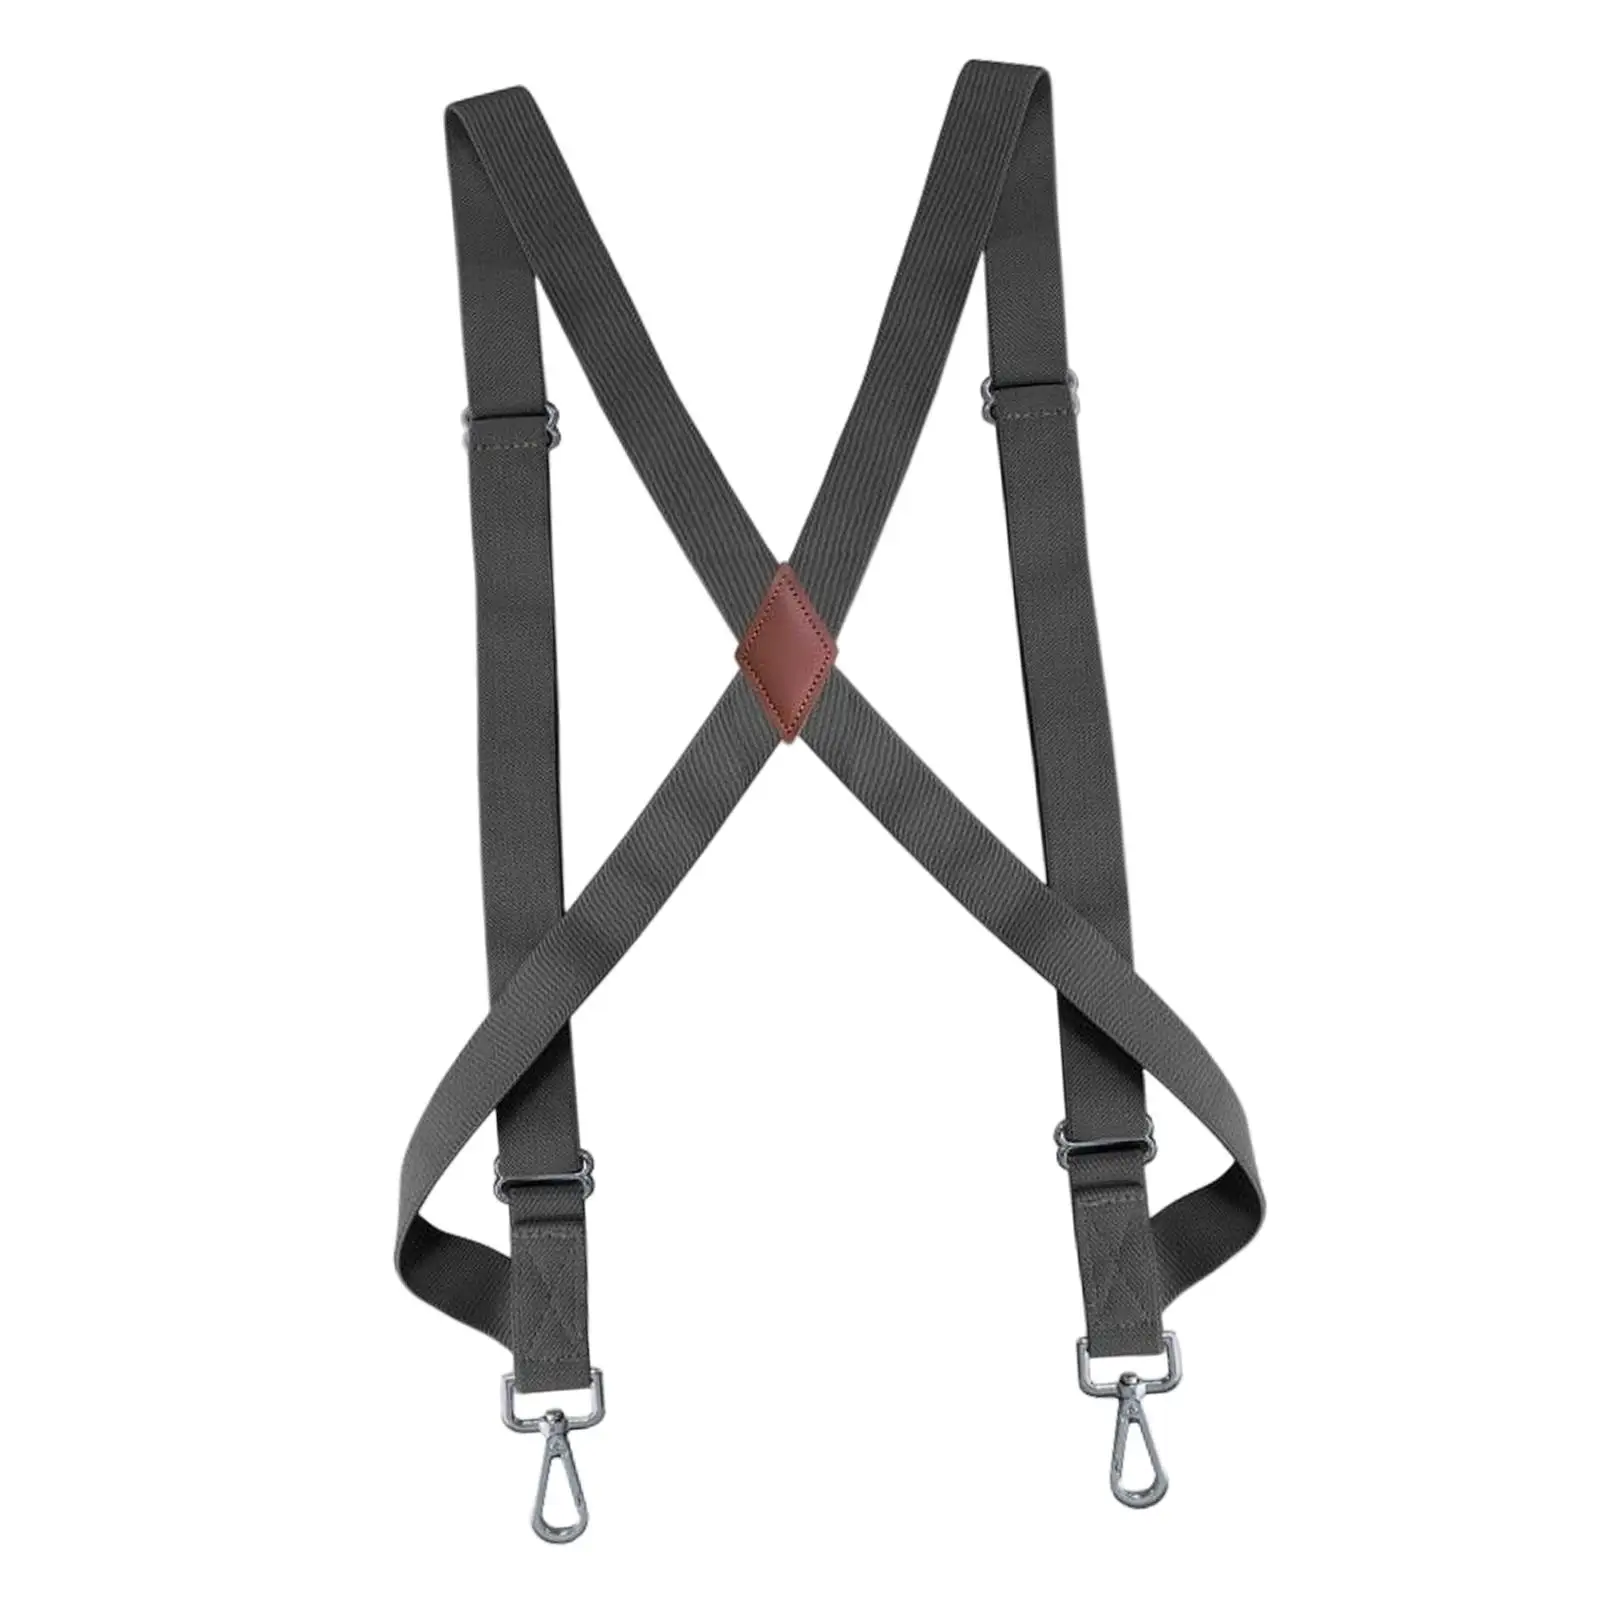 Mens Womens Suspender Swivel Hook Adults X Shaped Elastic Side Clip Suspender Adjustable Trucker Style Suspenders Pants Supplies